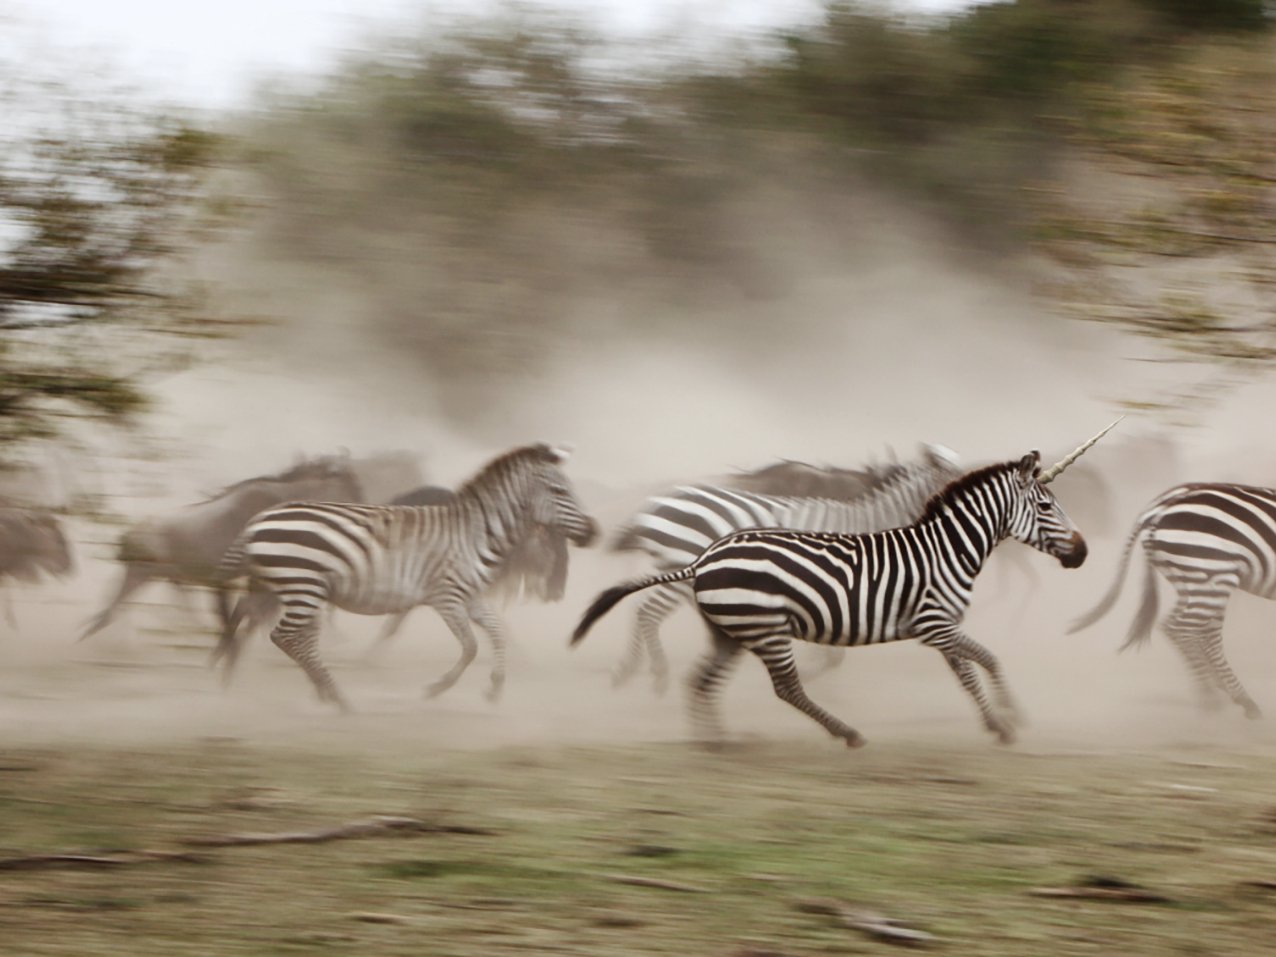 We hunt unicorns, but must also value technology zebras